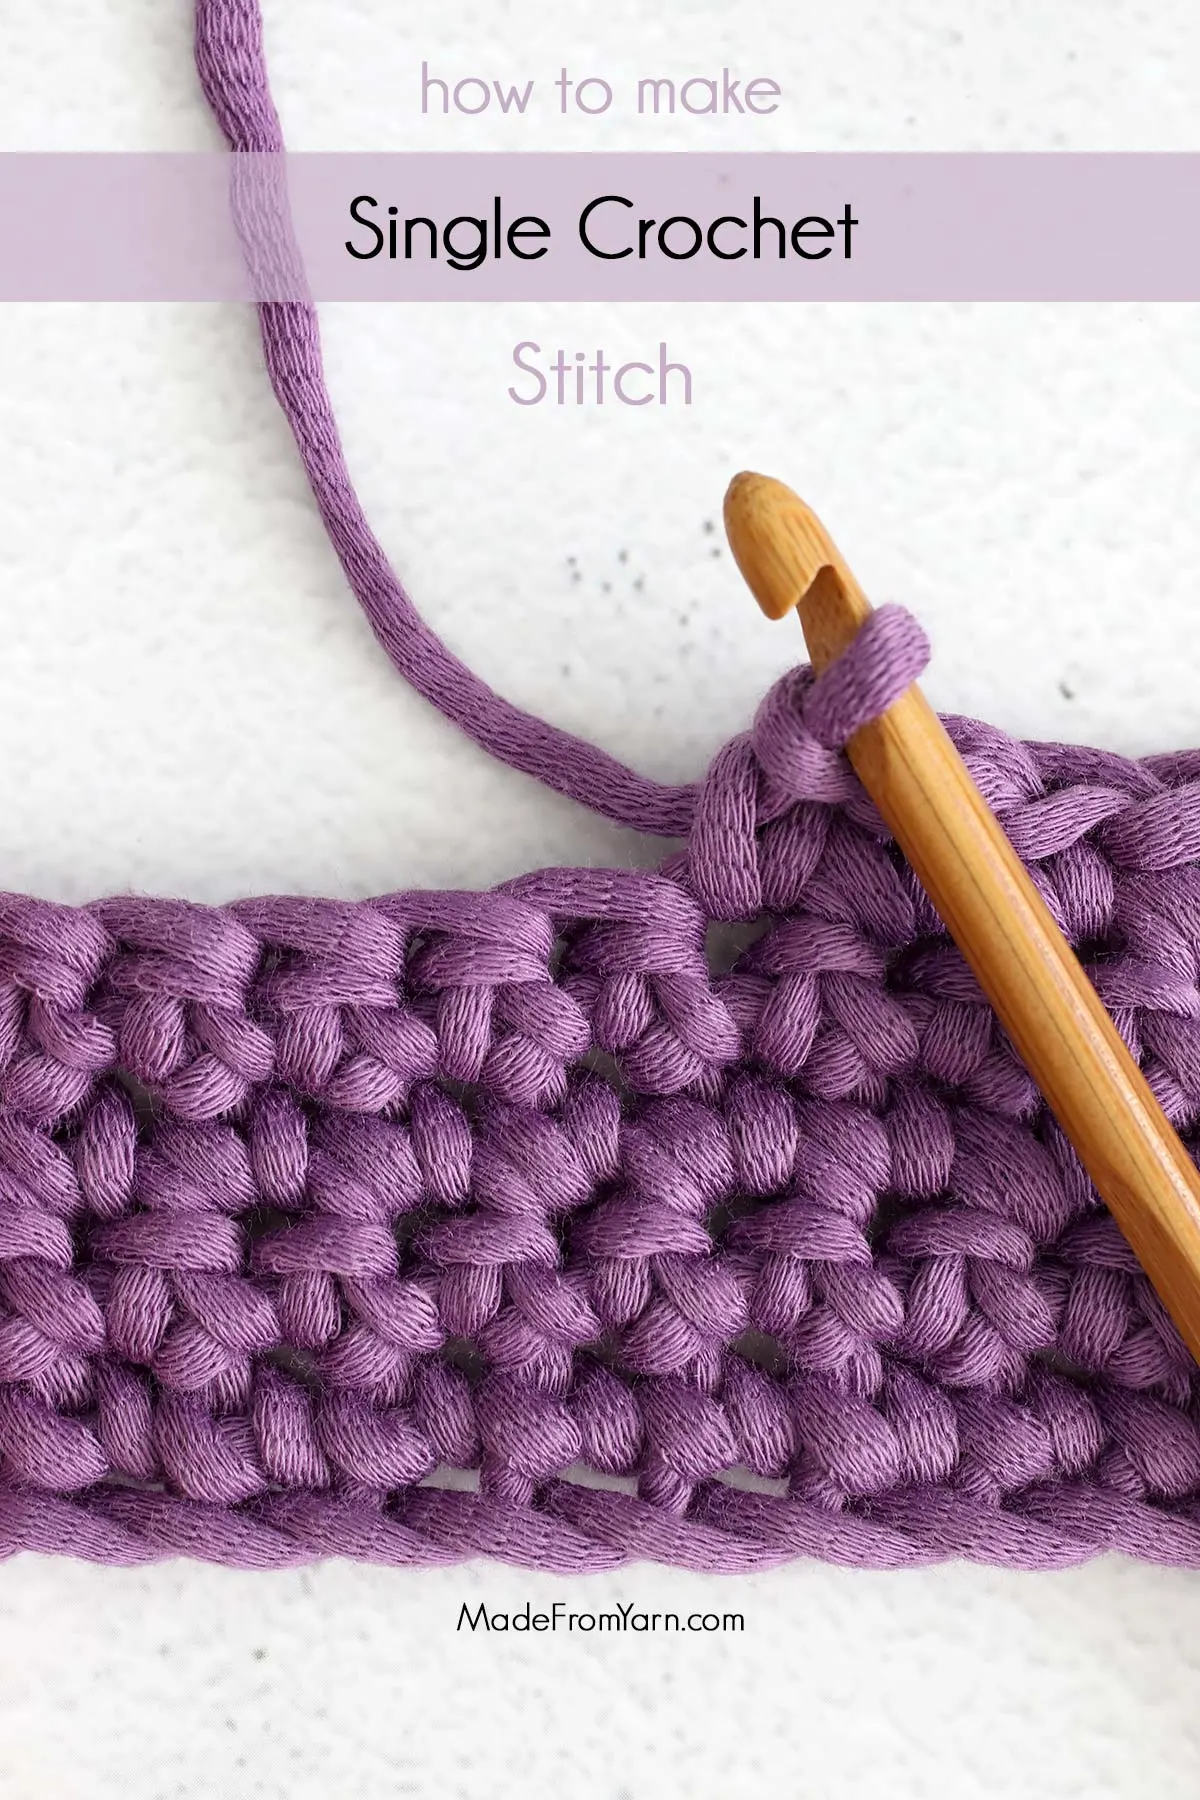 How to Crochet Single Crochet With Useful Beginners Tips